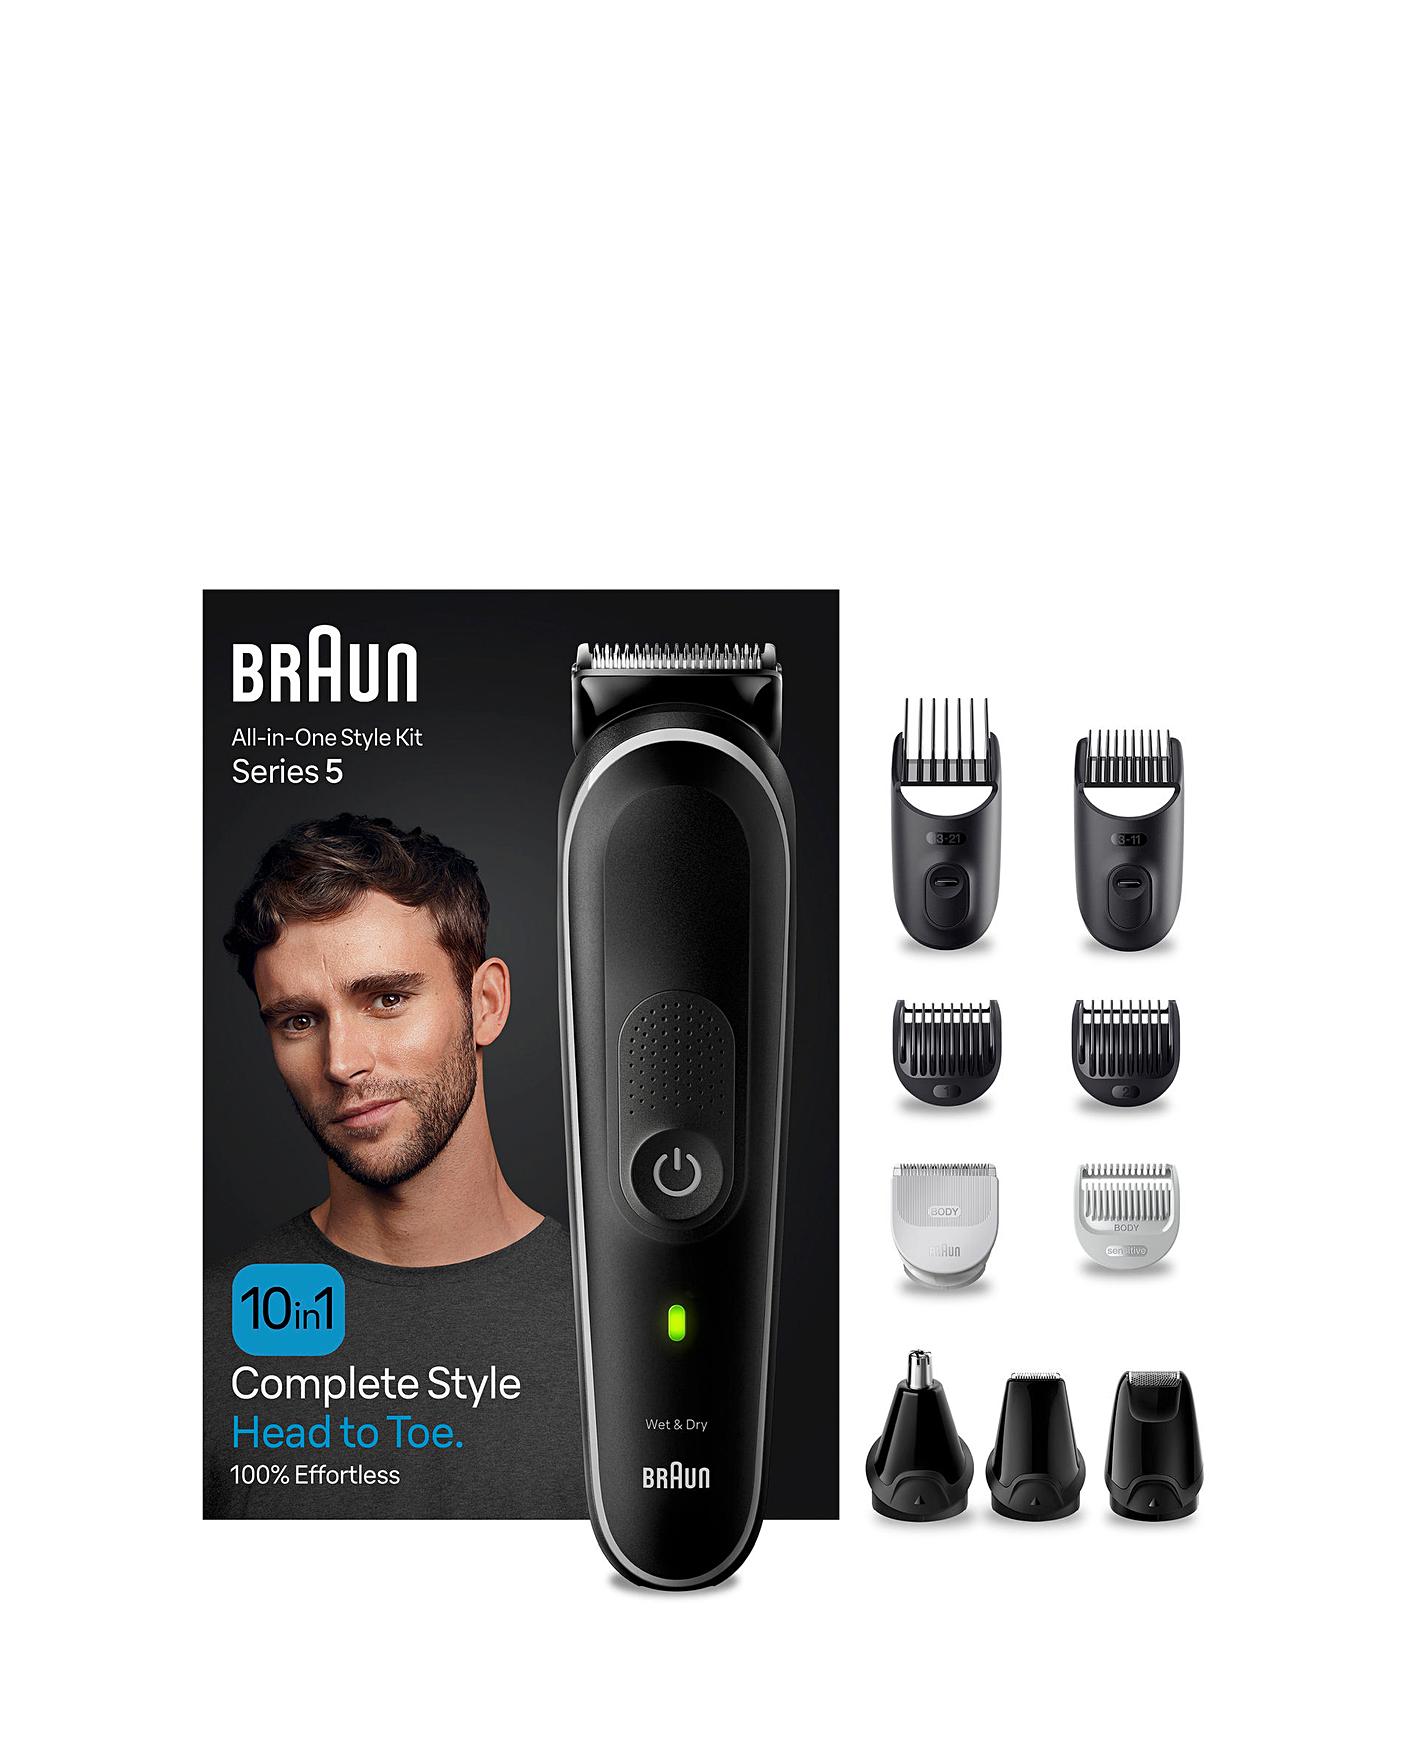 Braun - Series 5 5470 All-In-One Style Kit, 8-in-1 Grooming Kit